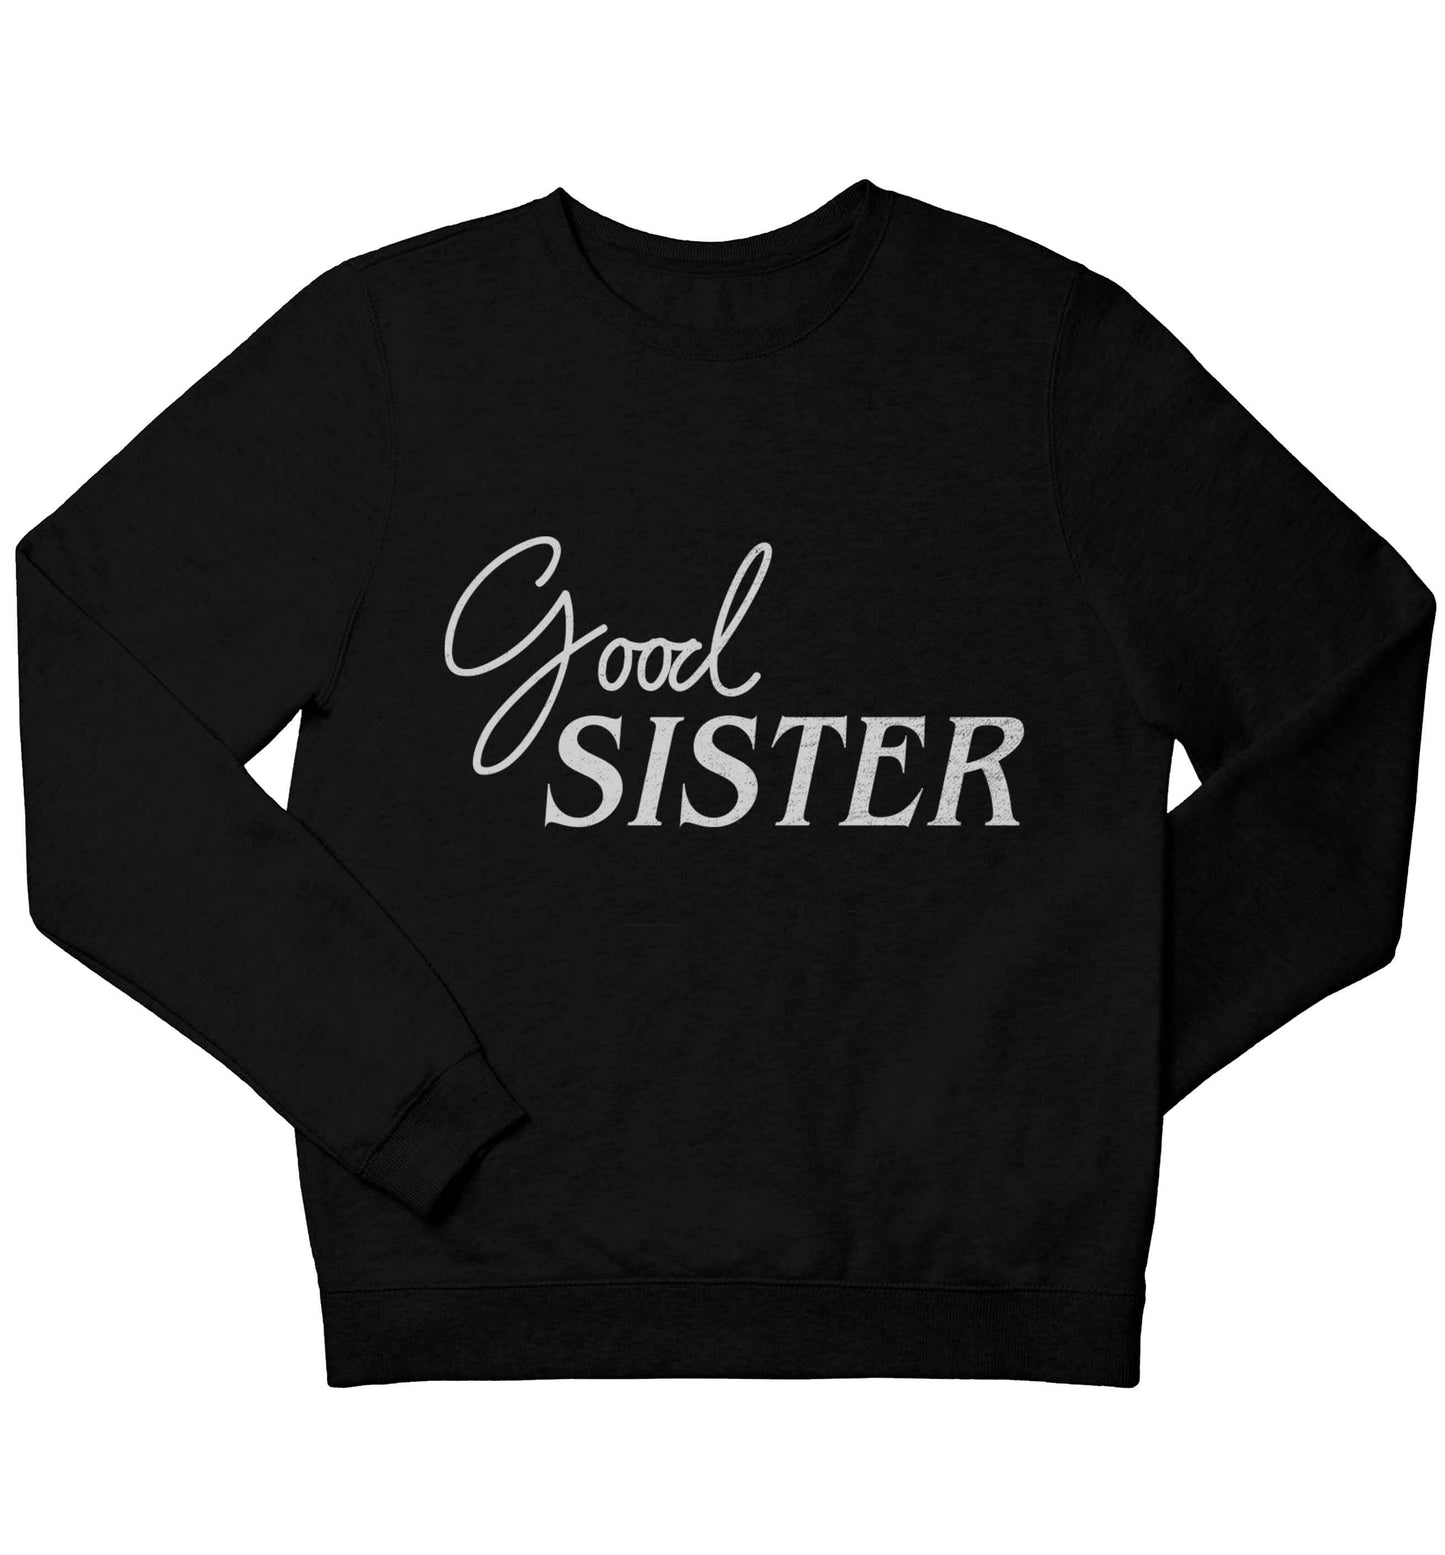 Good sister children's black sweater 12-13 Years